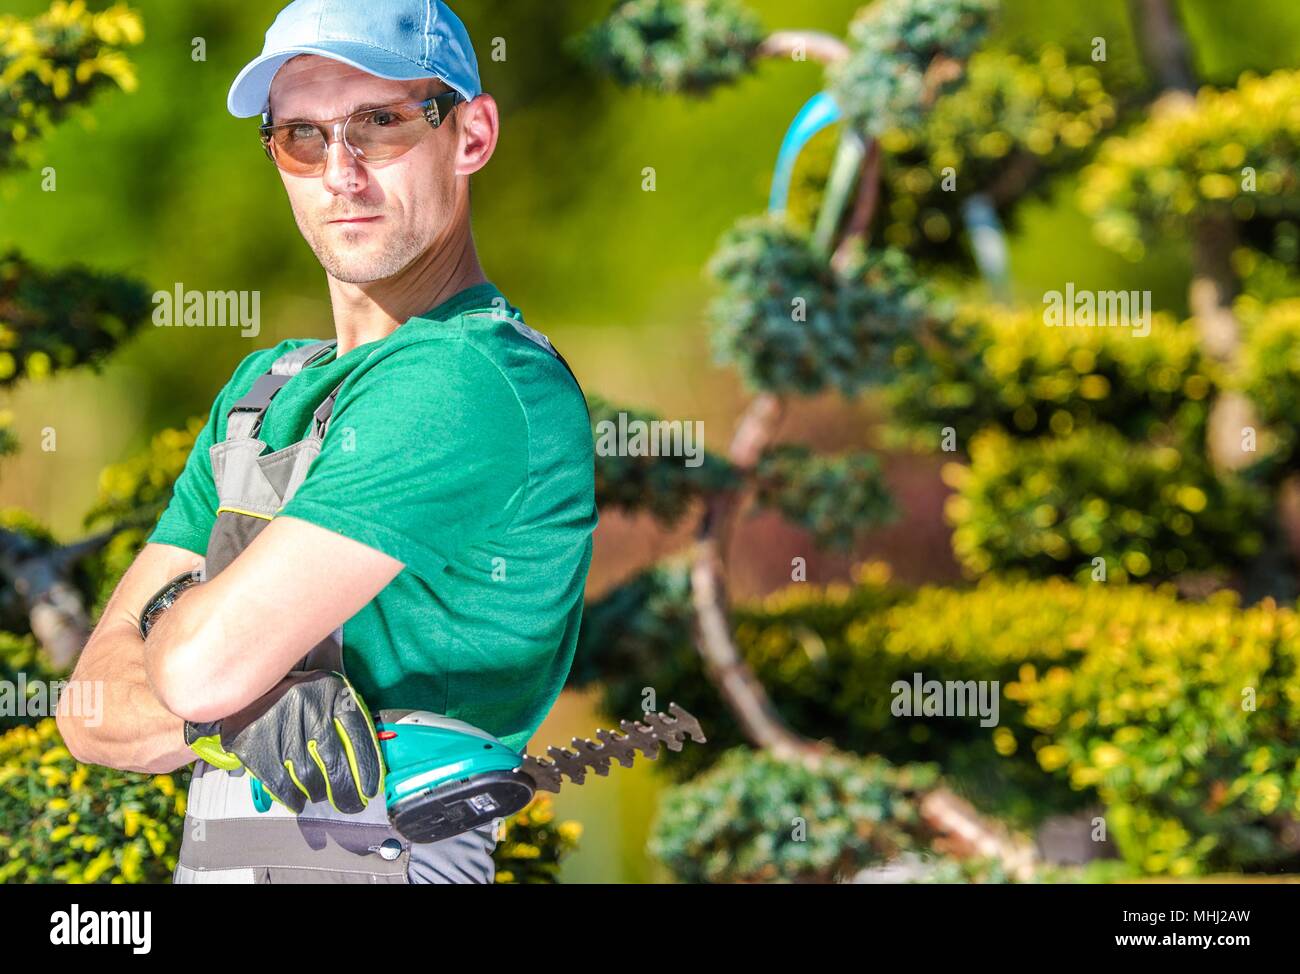 Professional Caucasian Gardener Portrait. Garden Worker with Compact Cordless Plants Trimmer. Stock Photo